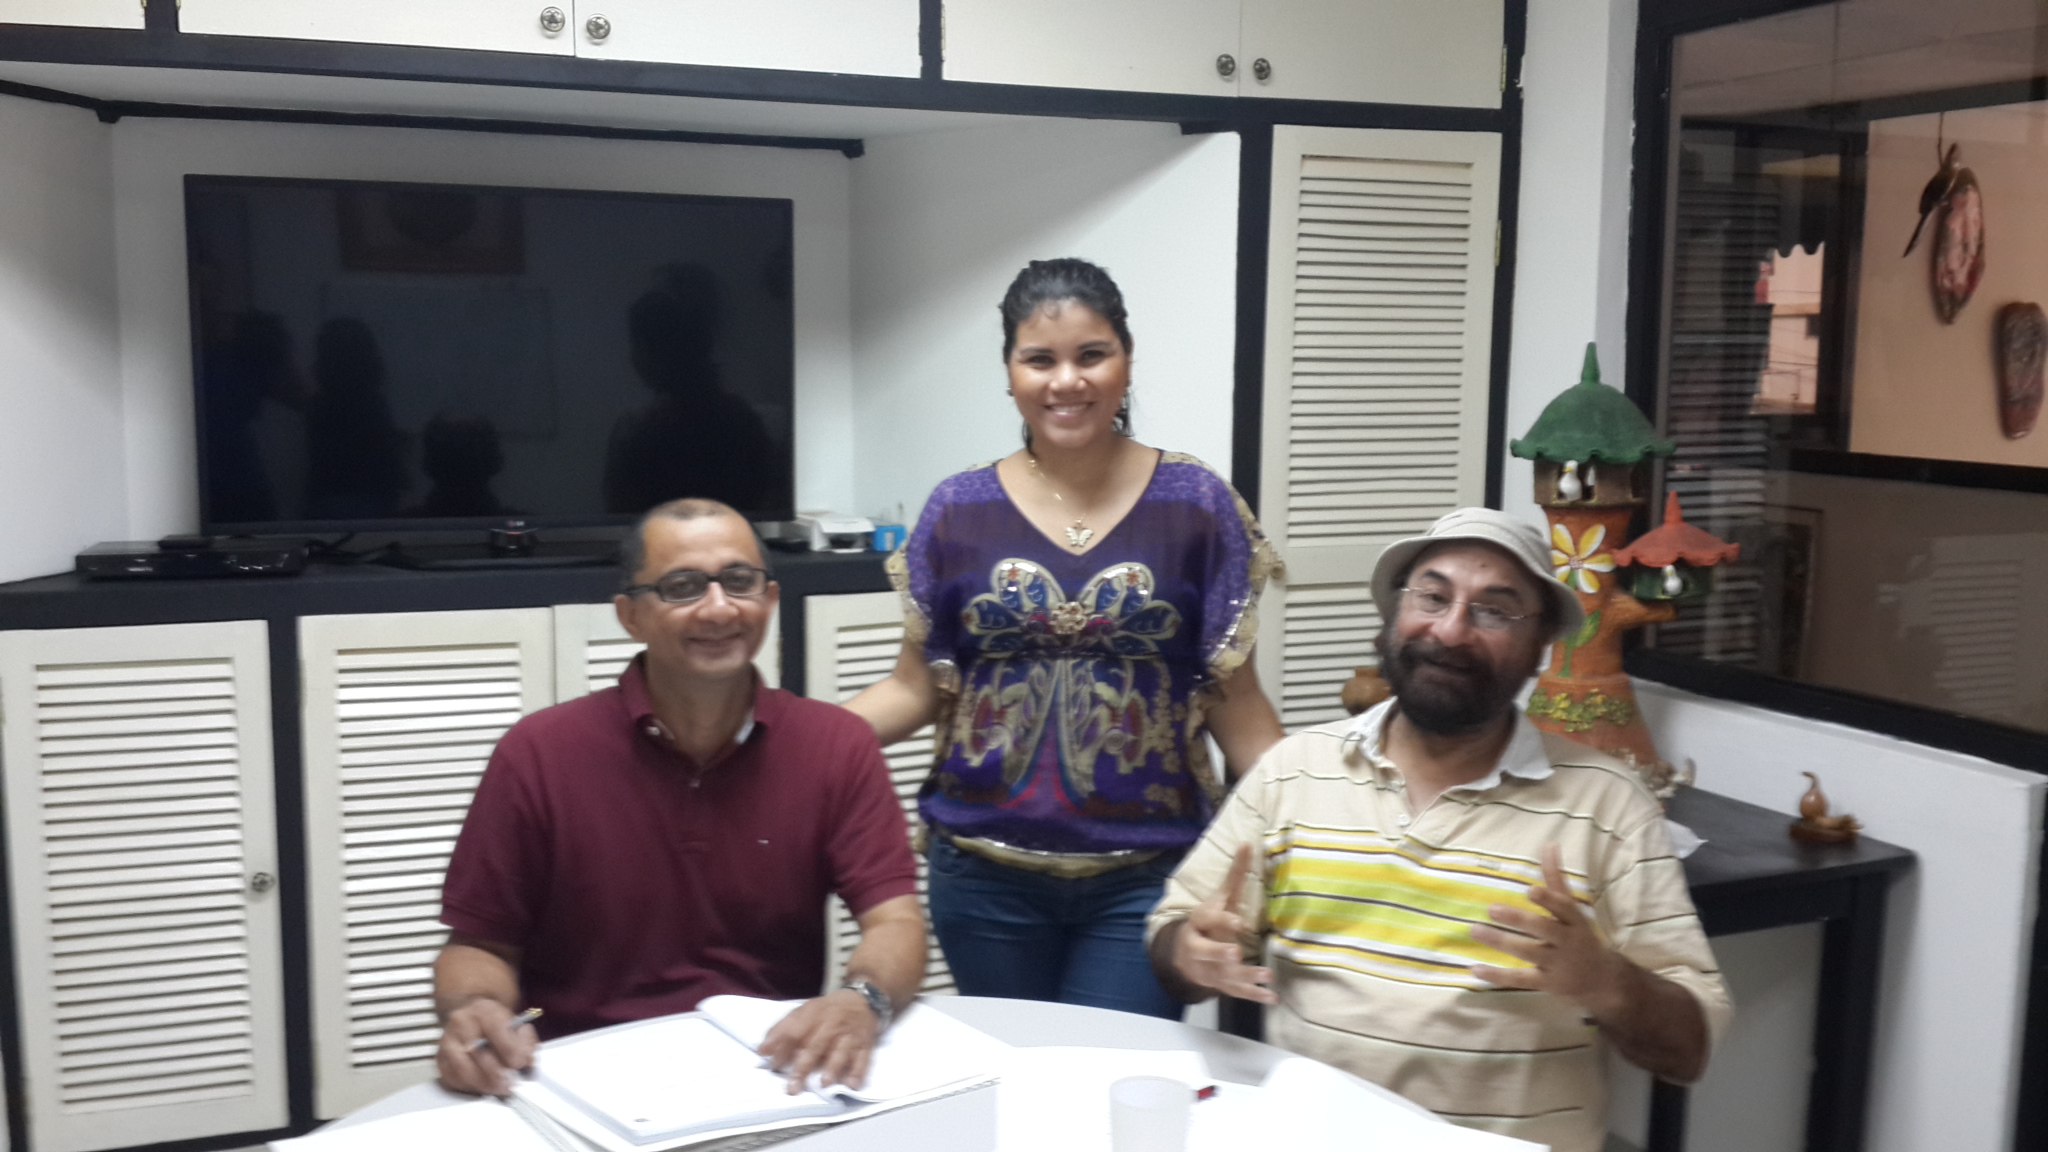 20150522 095544, Spanish Classes In Panama | Learn Spanish Abroad | Spanish Language Immersion Programs